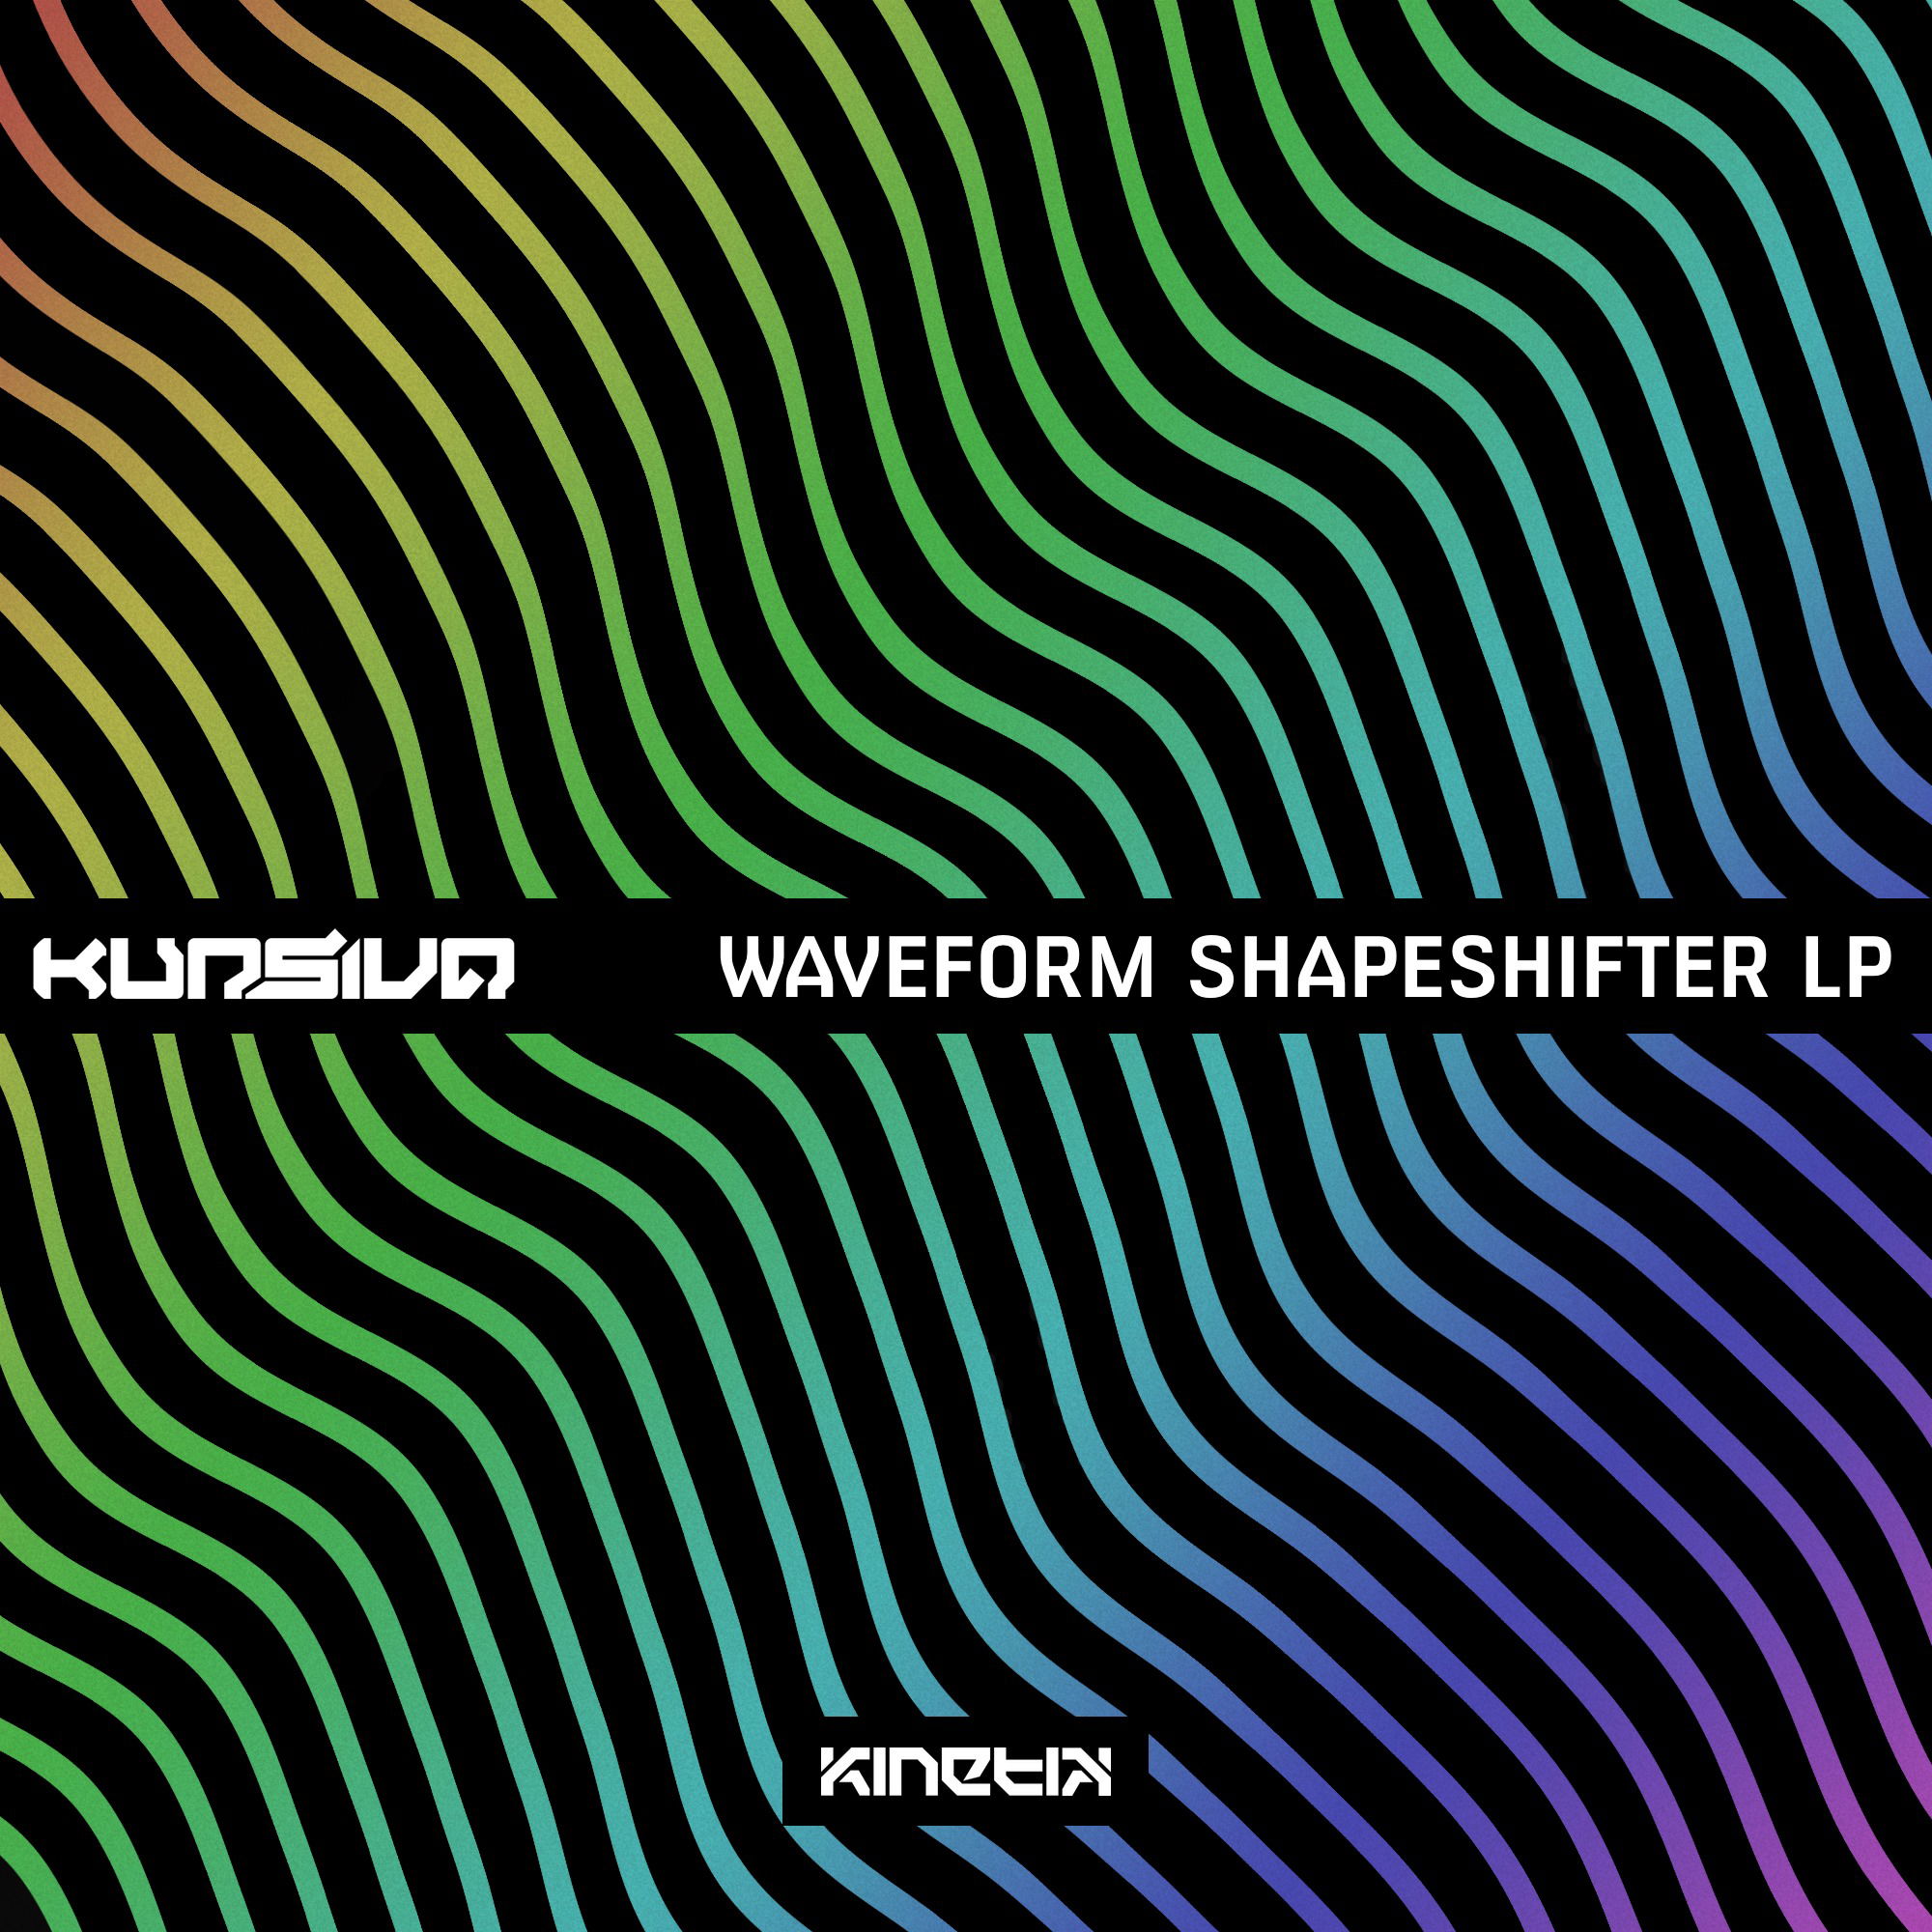 Waveform Shapeshifter LP by: Kursiva